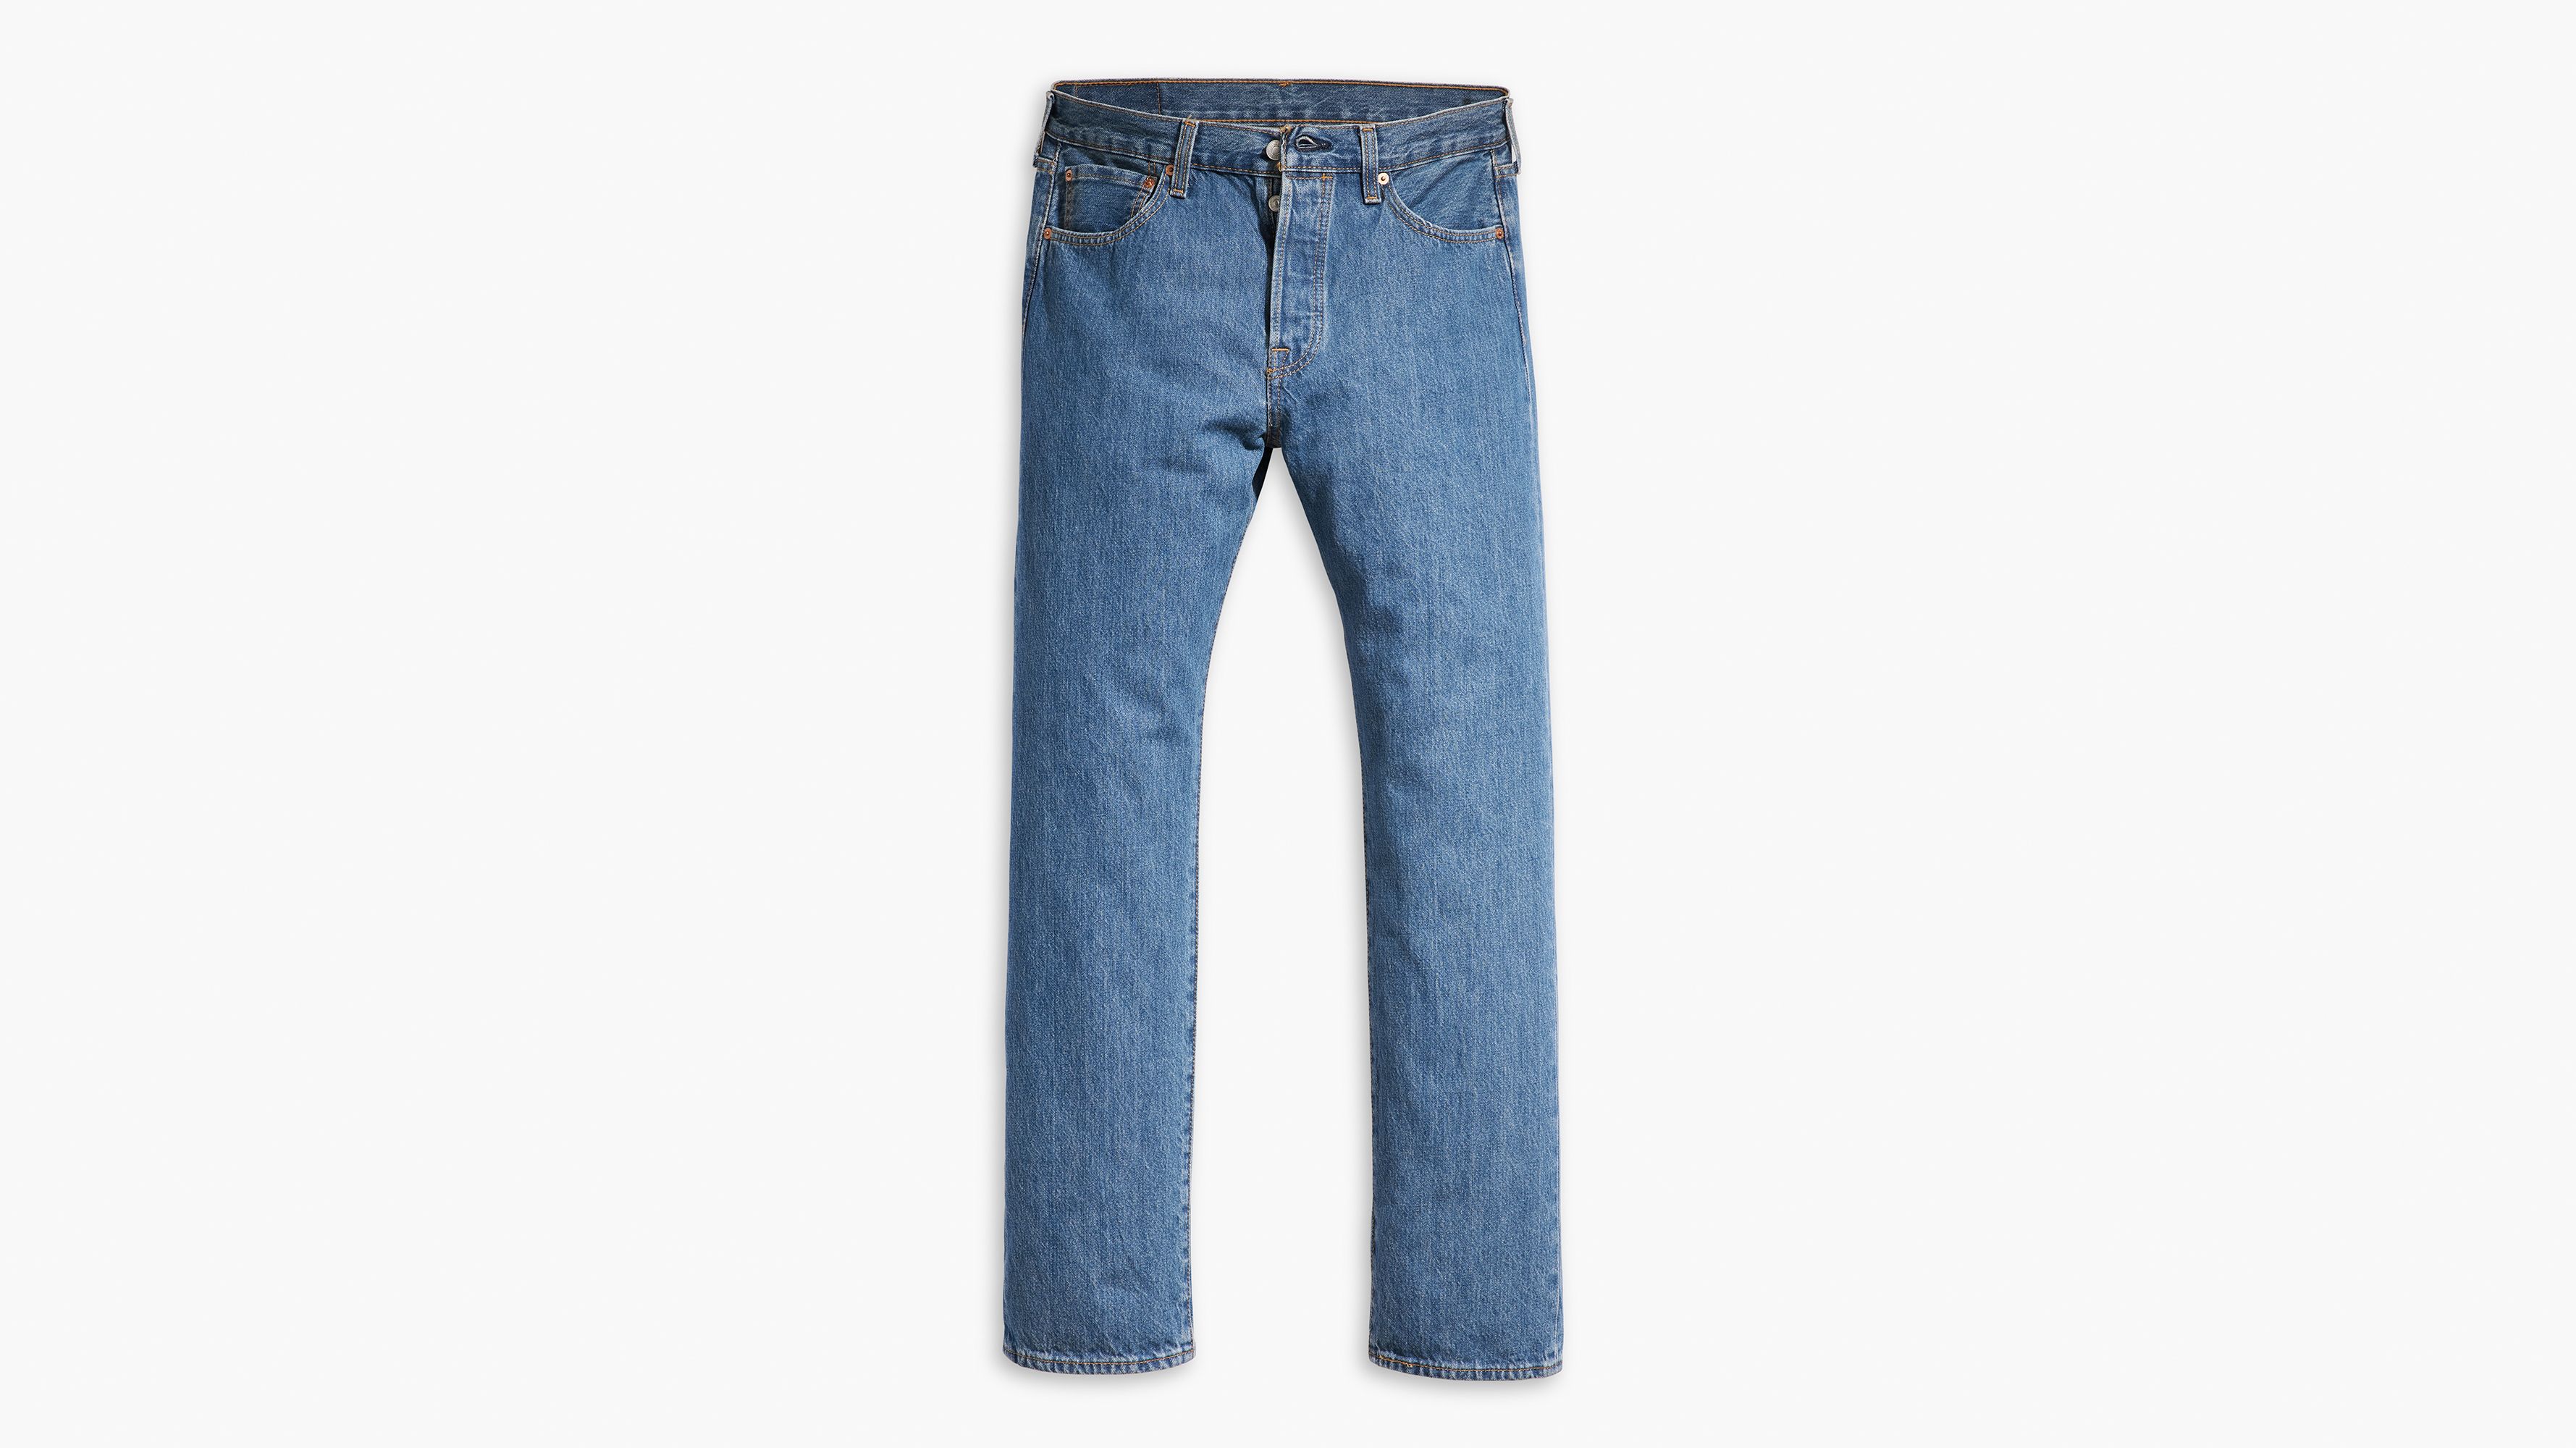 NEW Levis Lot 501 Jeans Big E Premium Blue Black Denim Genuine Straight BNWT